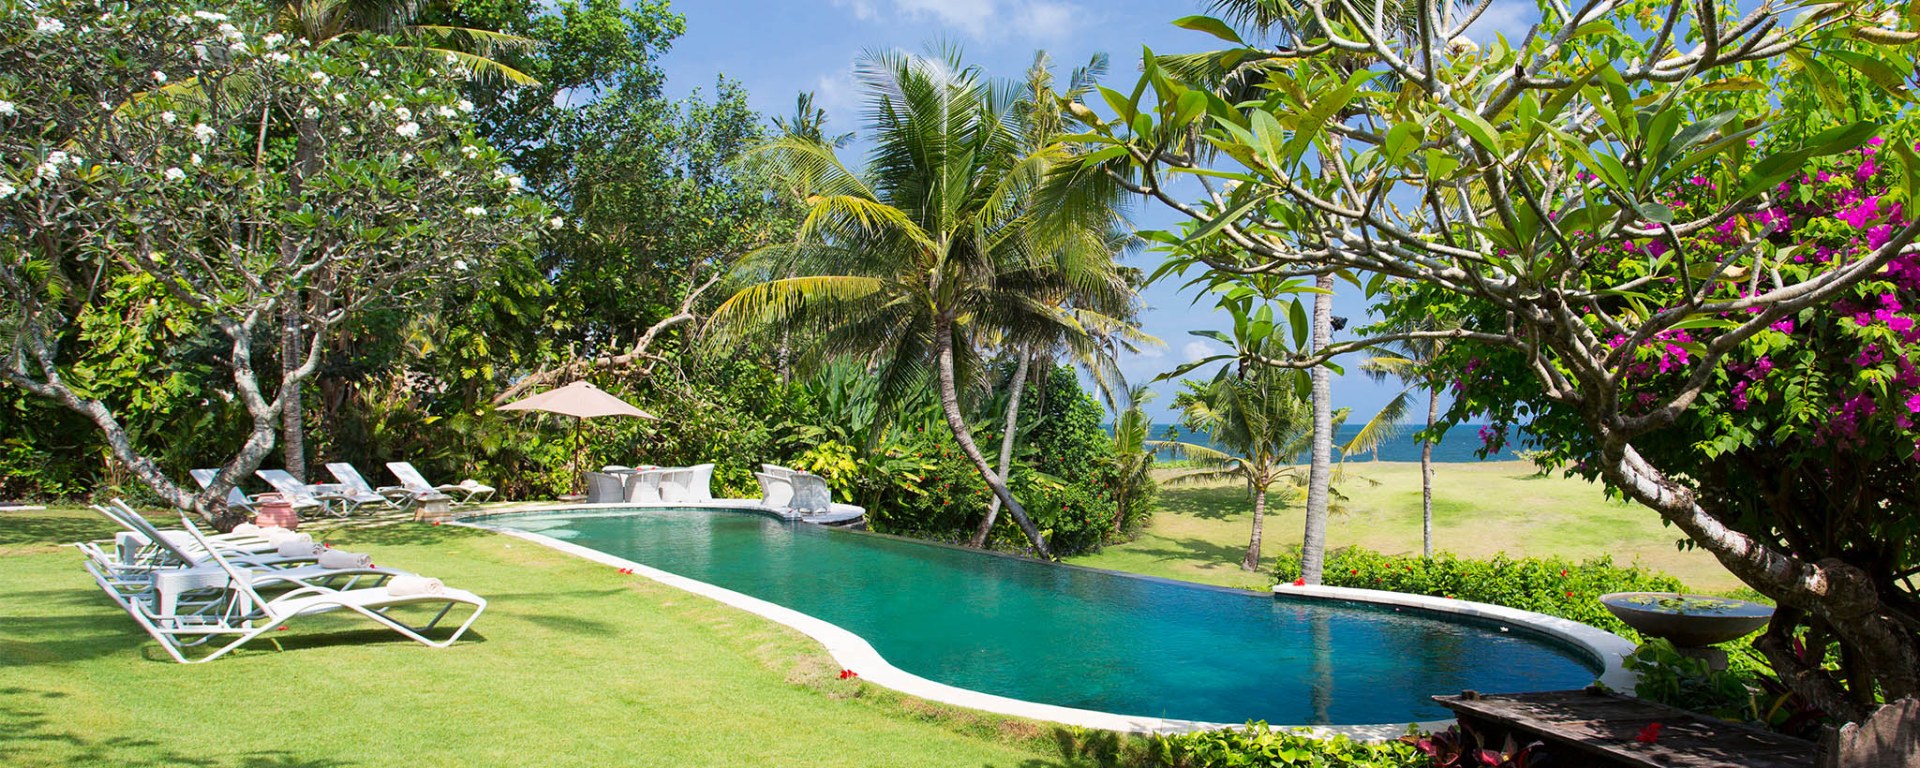 Luxusreise Bali - Sungai Tinggi Beach Villa